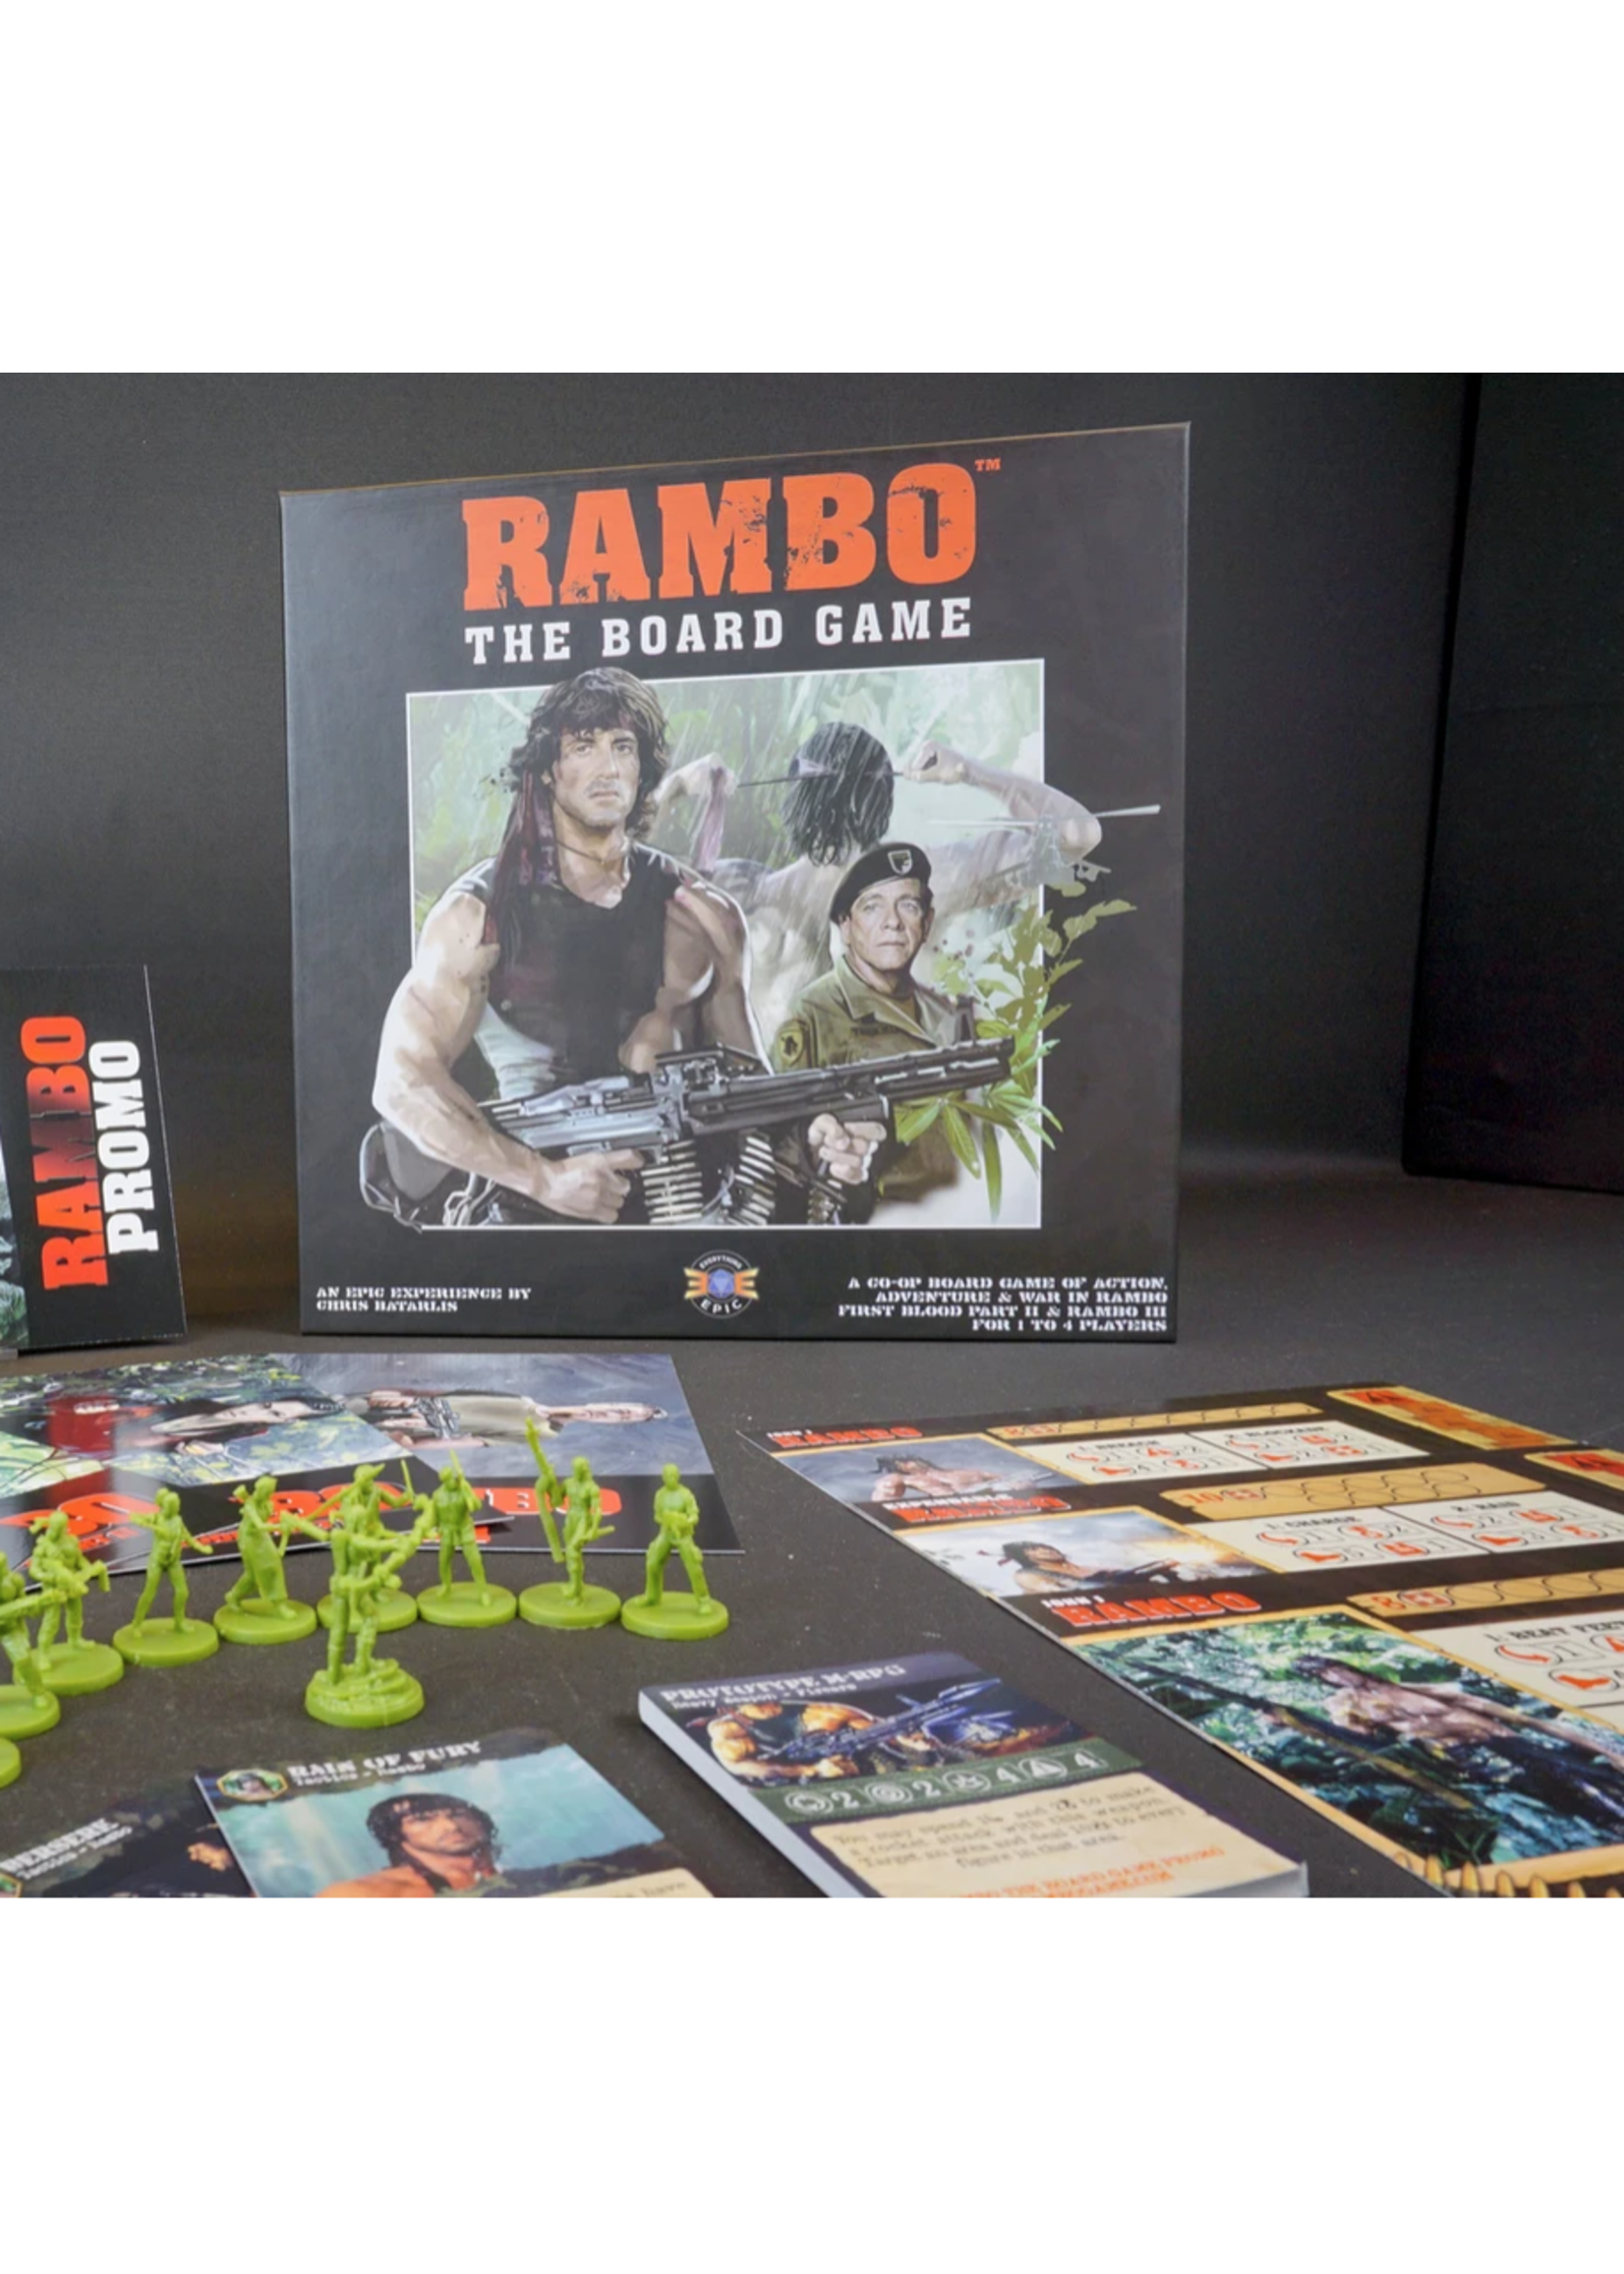 Rambo - The Board Game: First Blood